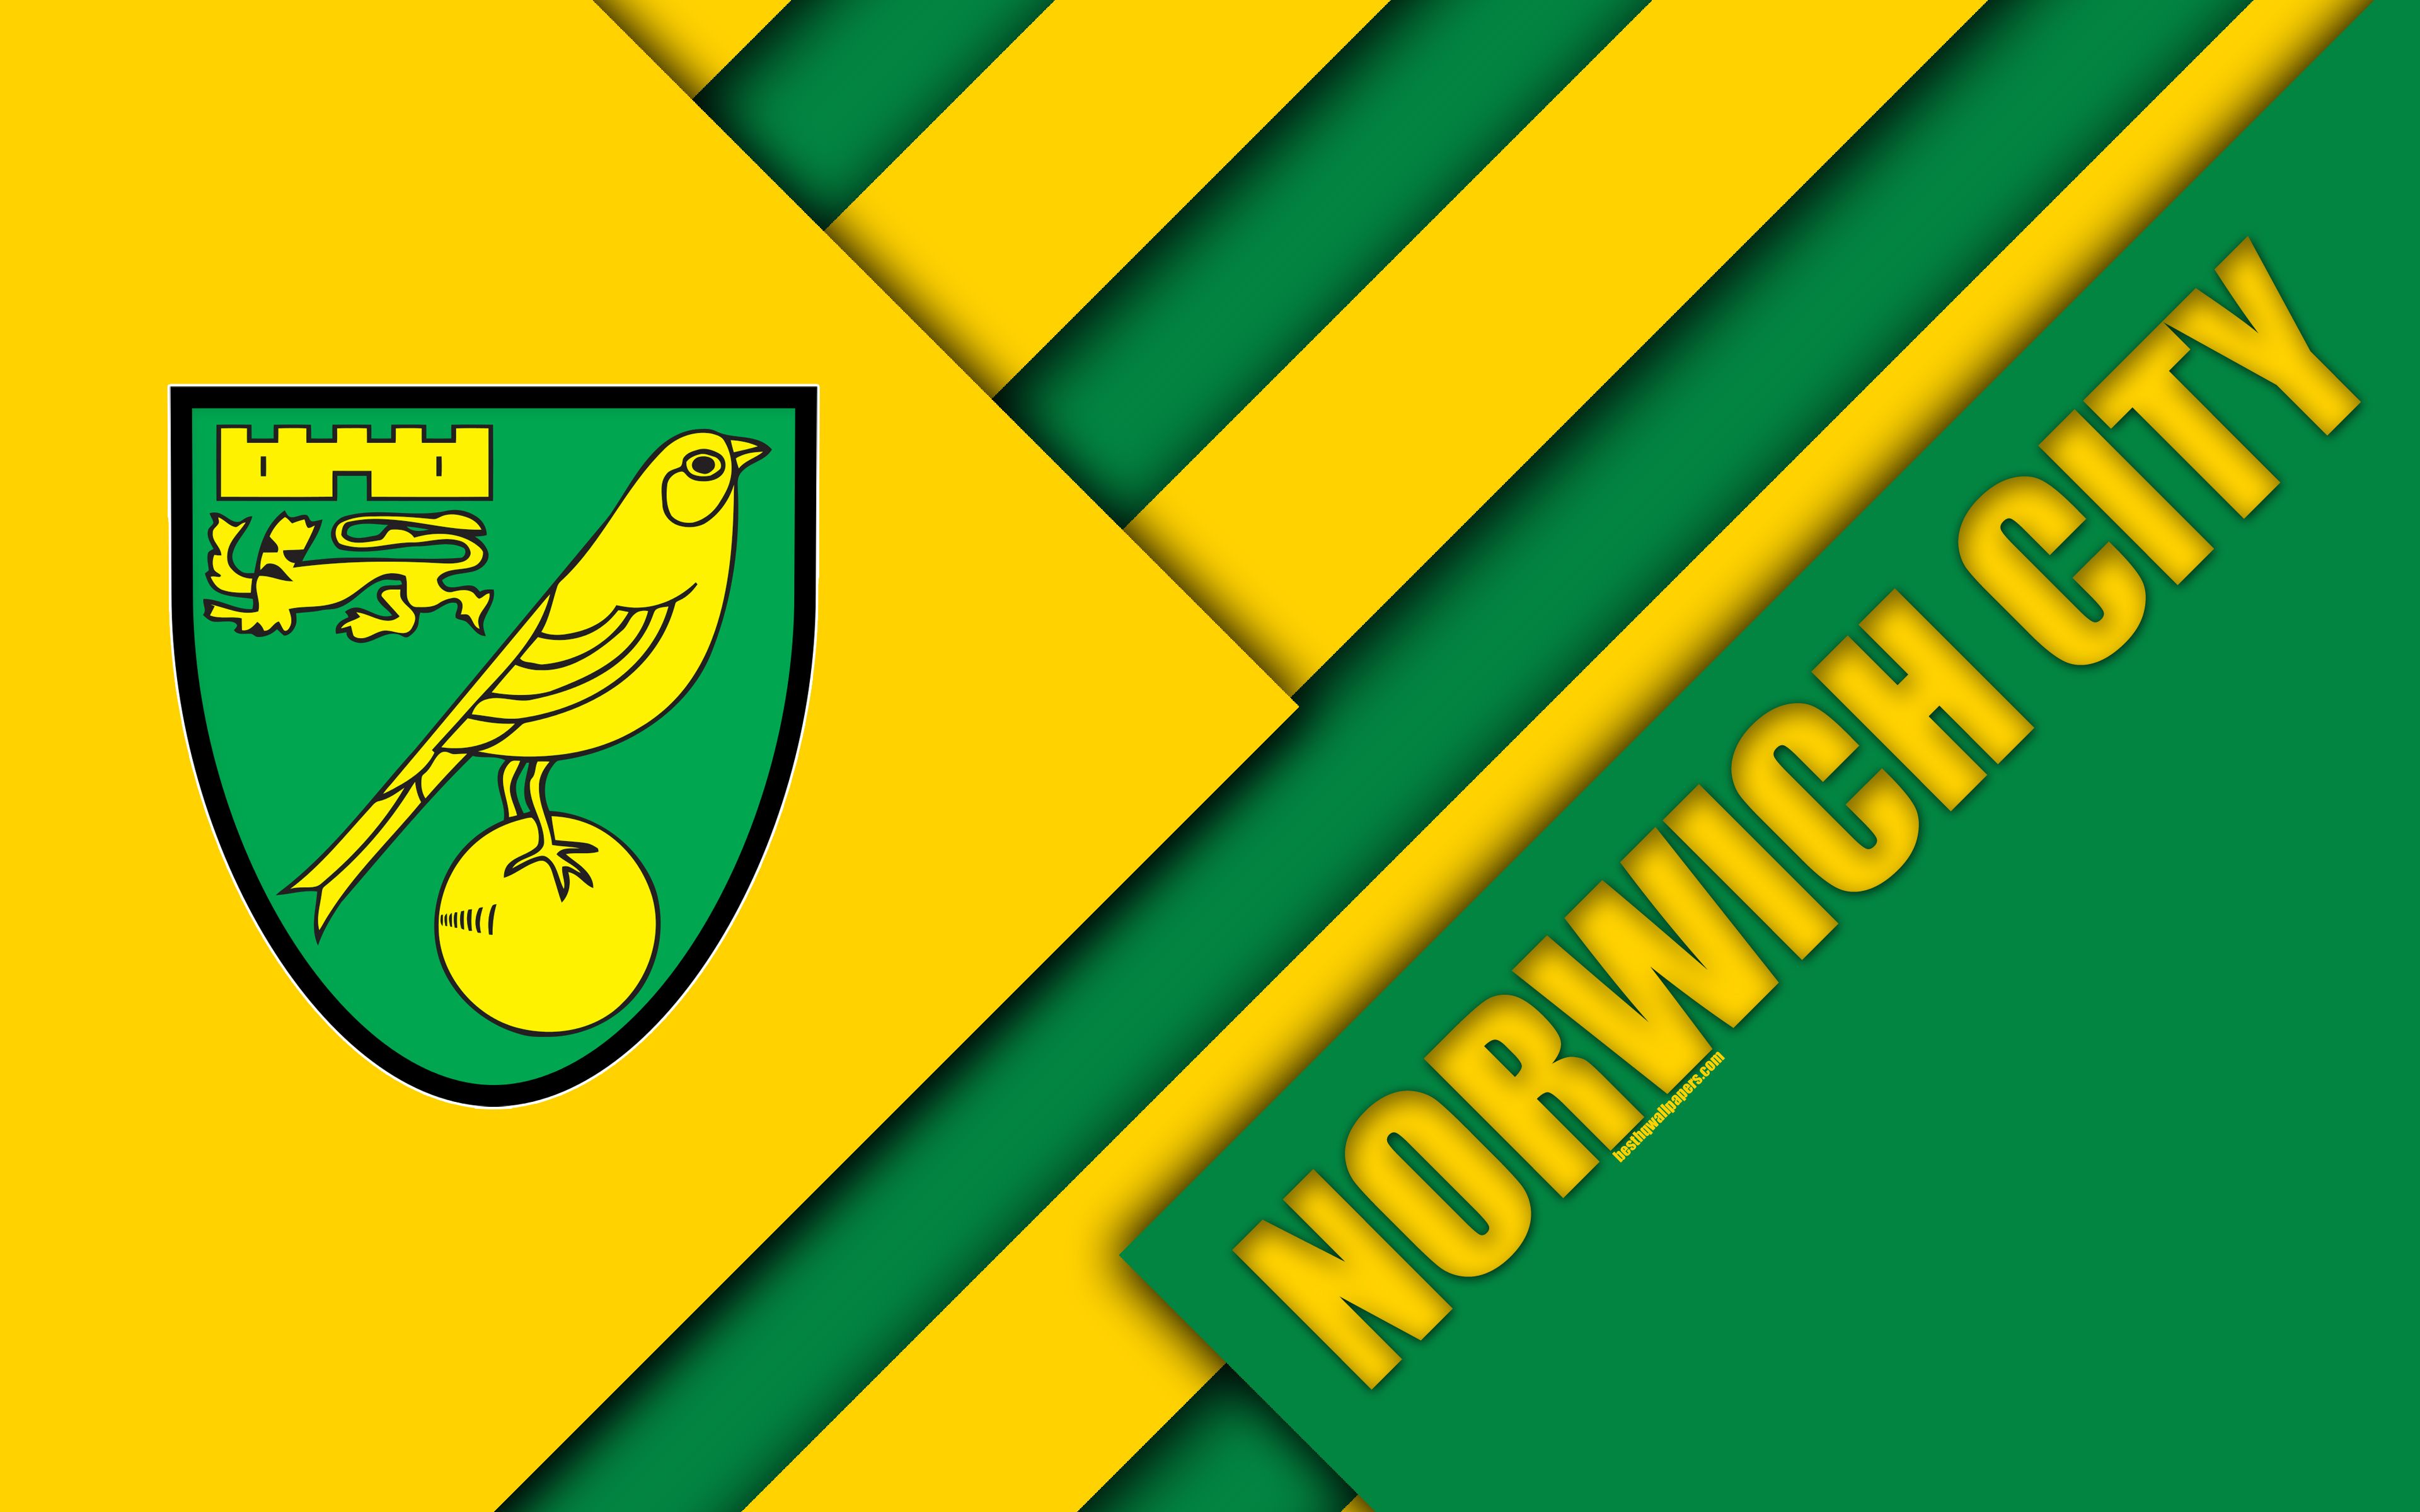 Download wallpaper Norwich City FC, logo, 4k, yellow green